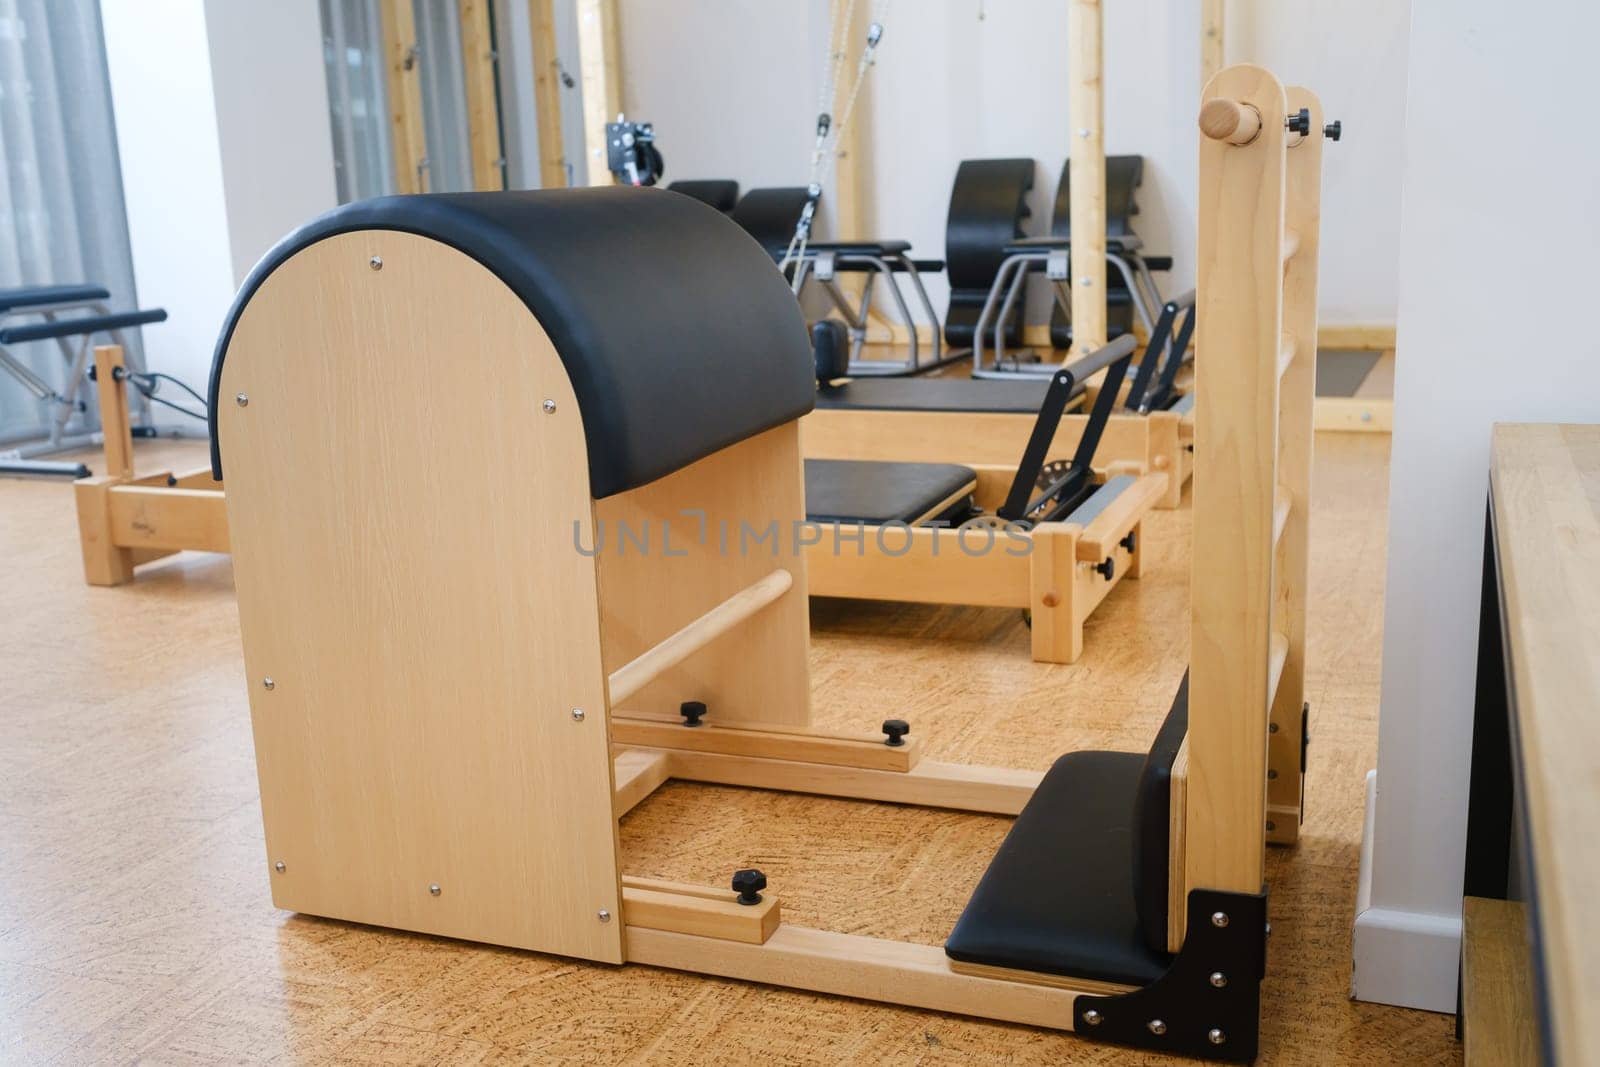 Pilates simulator is a barrel in the yoga room. Pilates equipment.